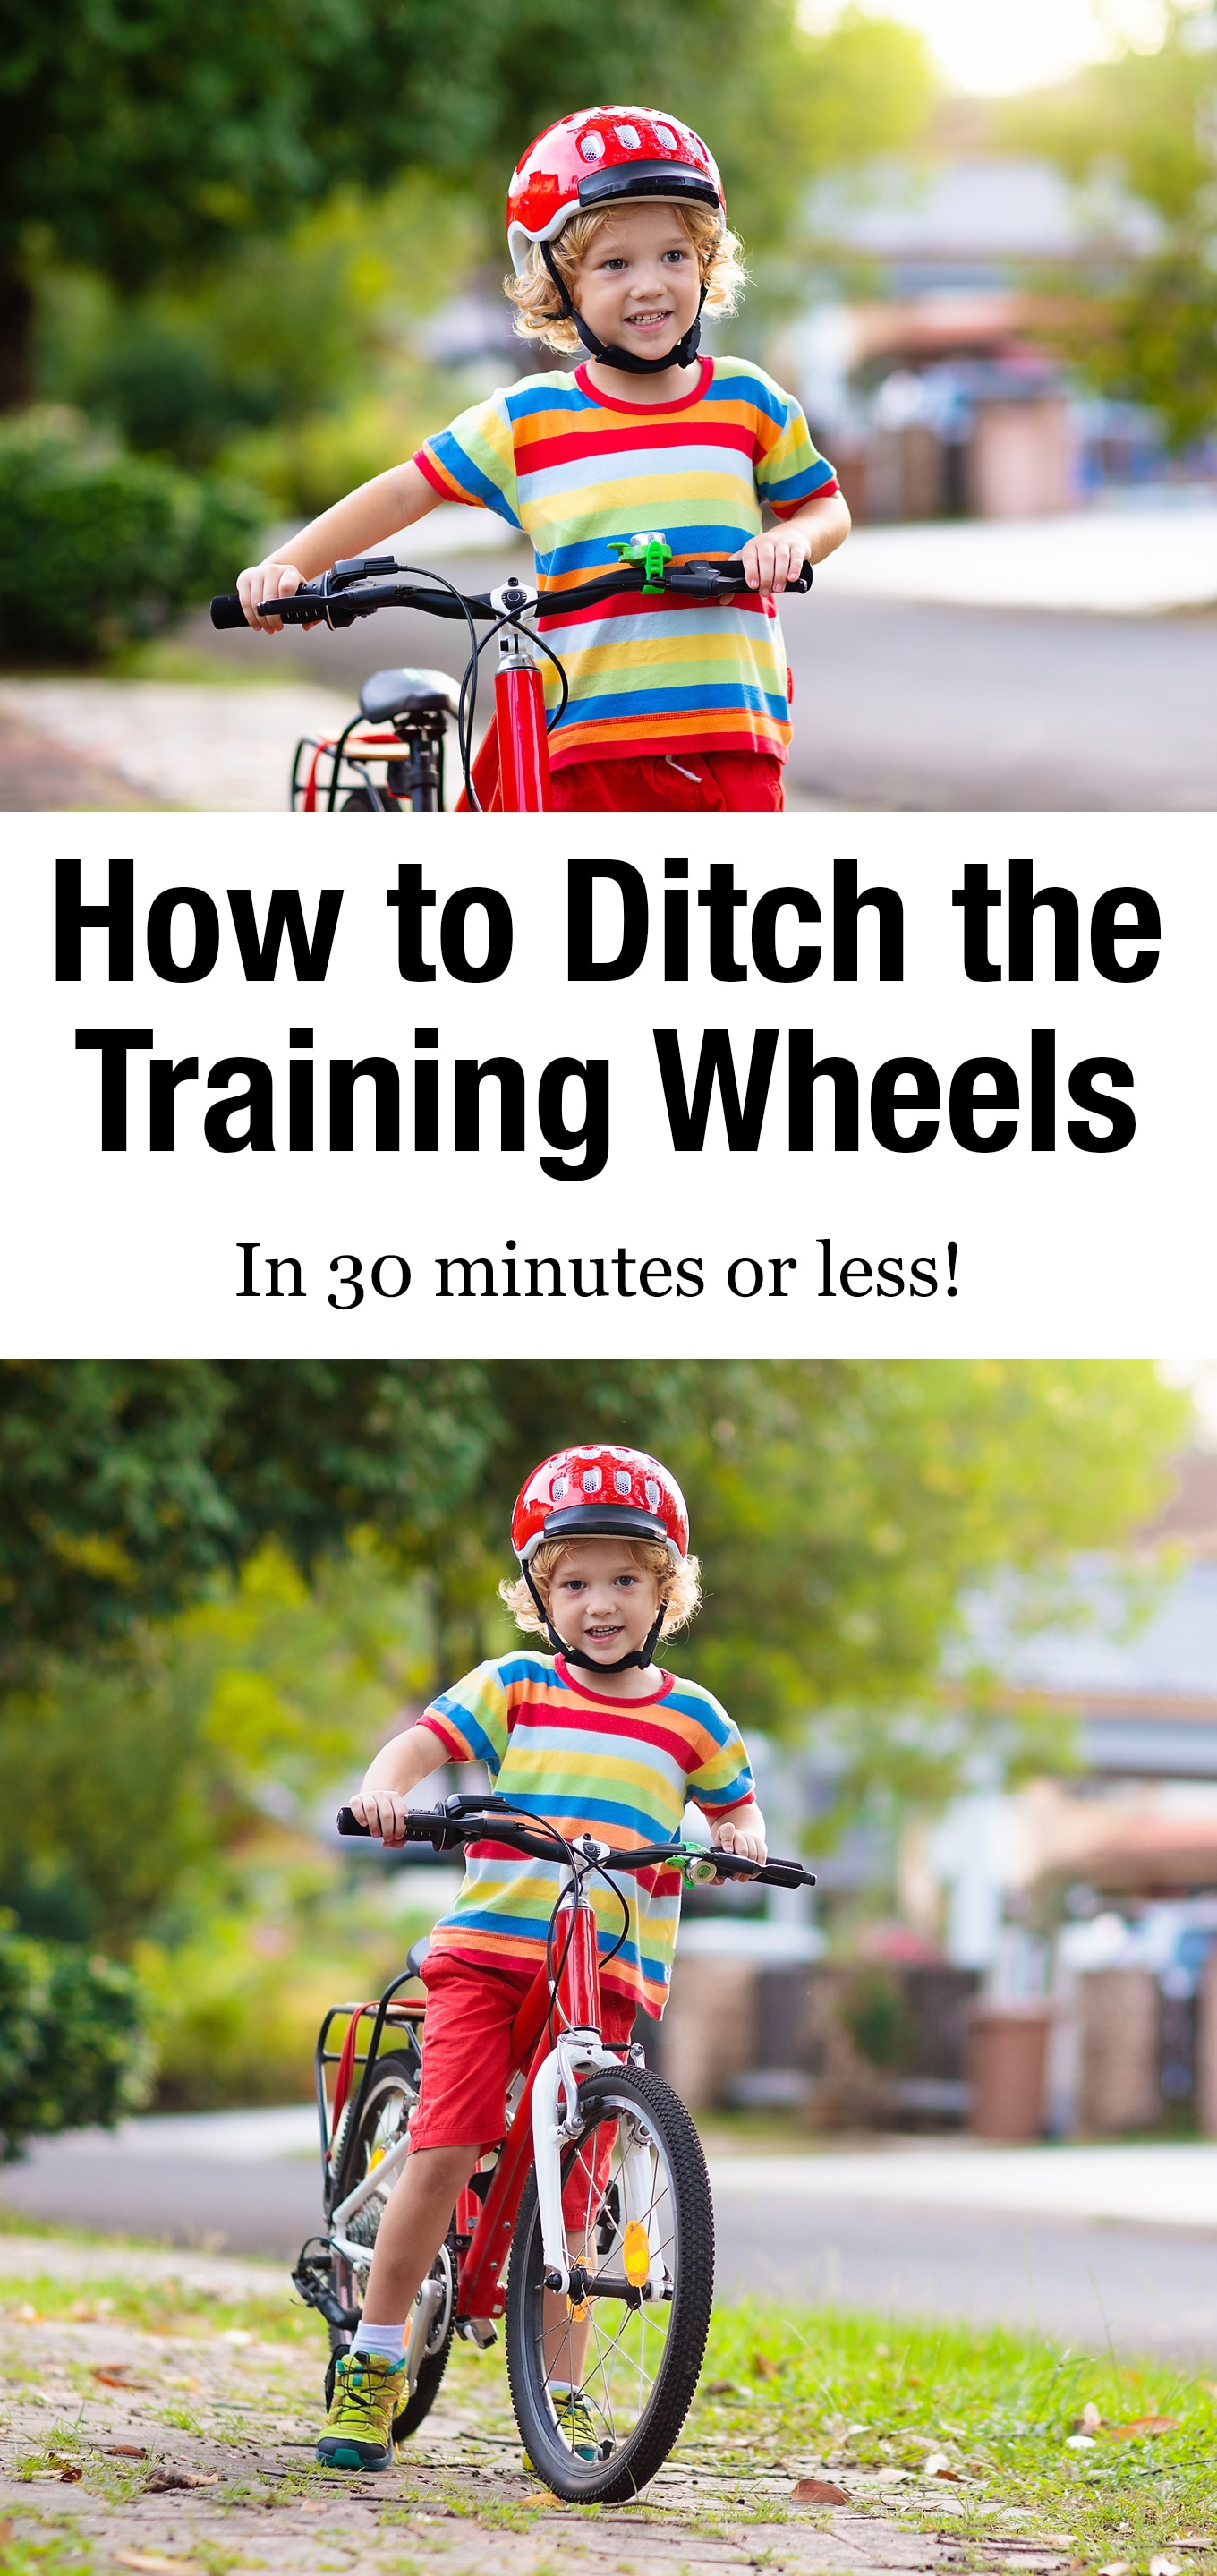 teaching kid to ride bike without training wheels